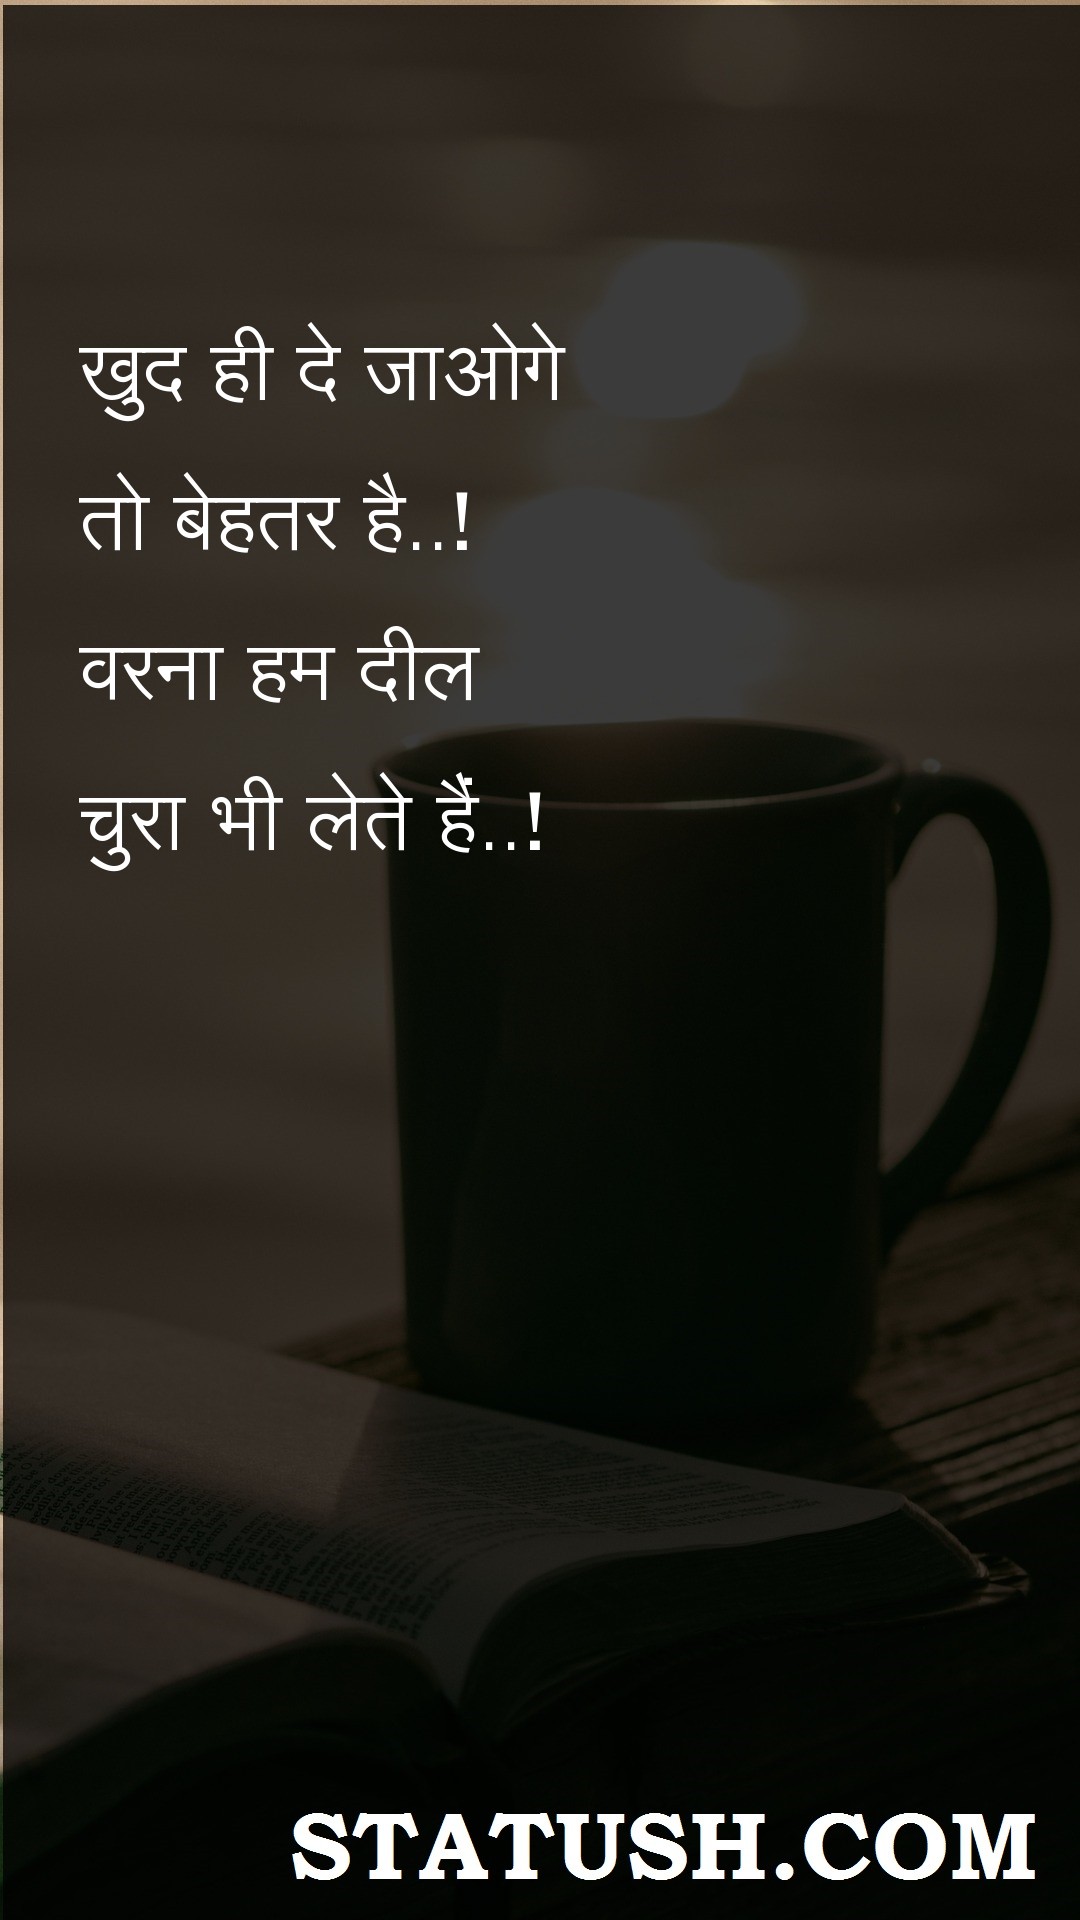 If you give yourself Hindi Quotes at statush.com